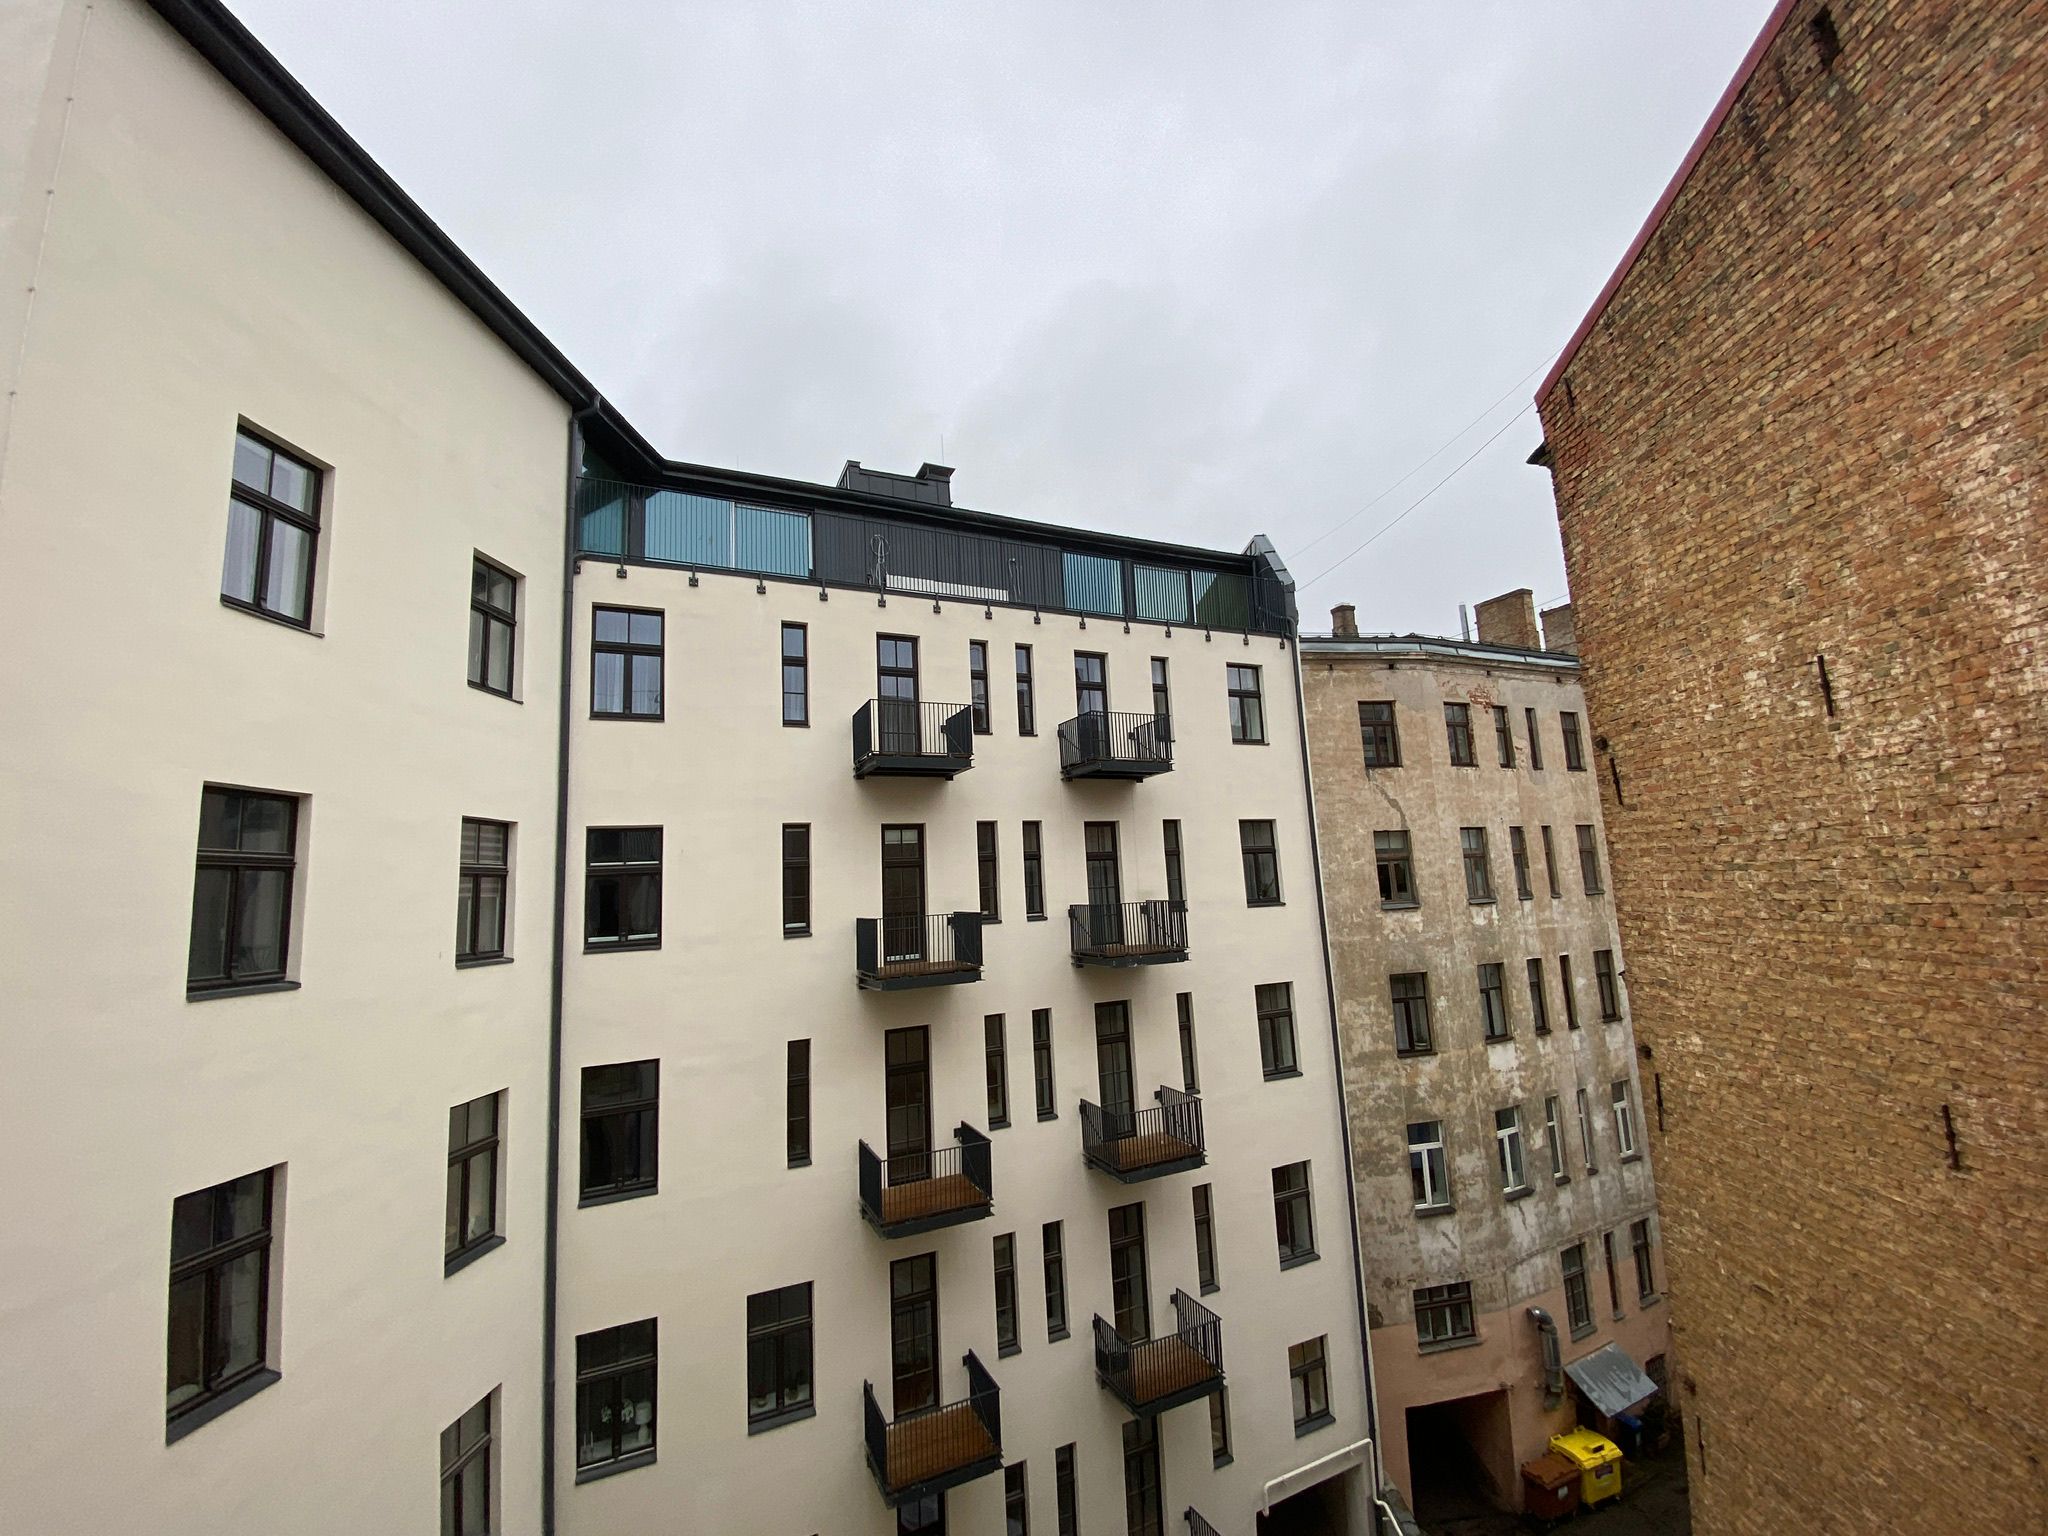 Apartment for sale, Aleksandra Čaka street 26 - Image 1